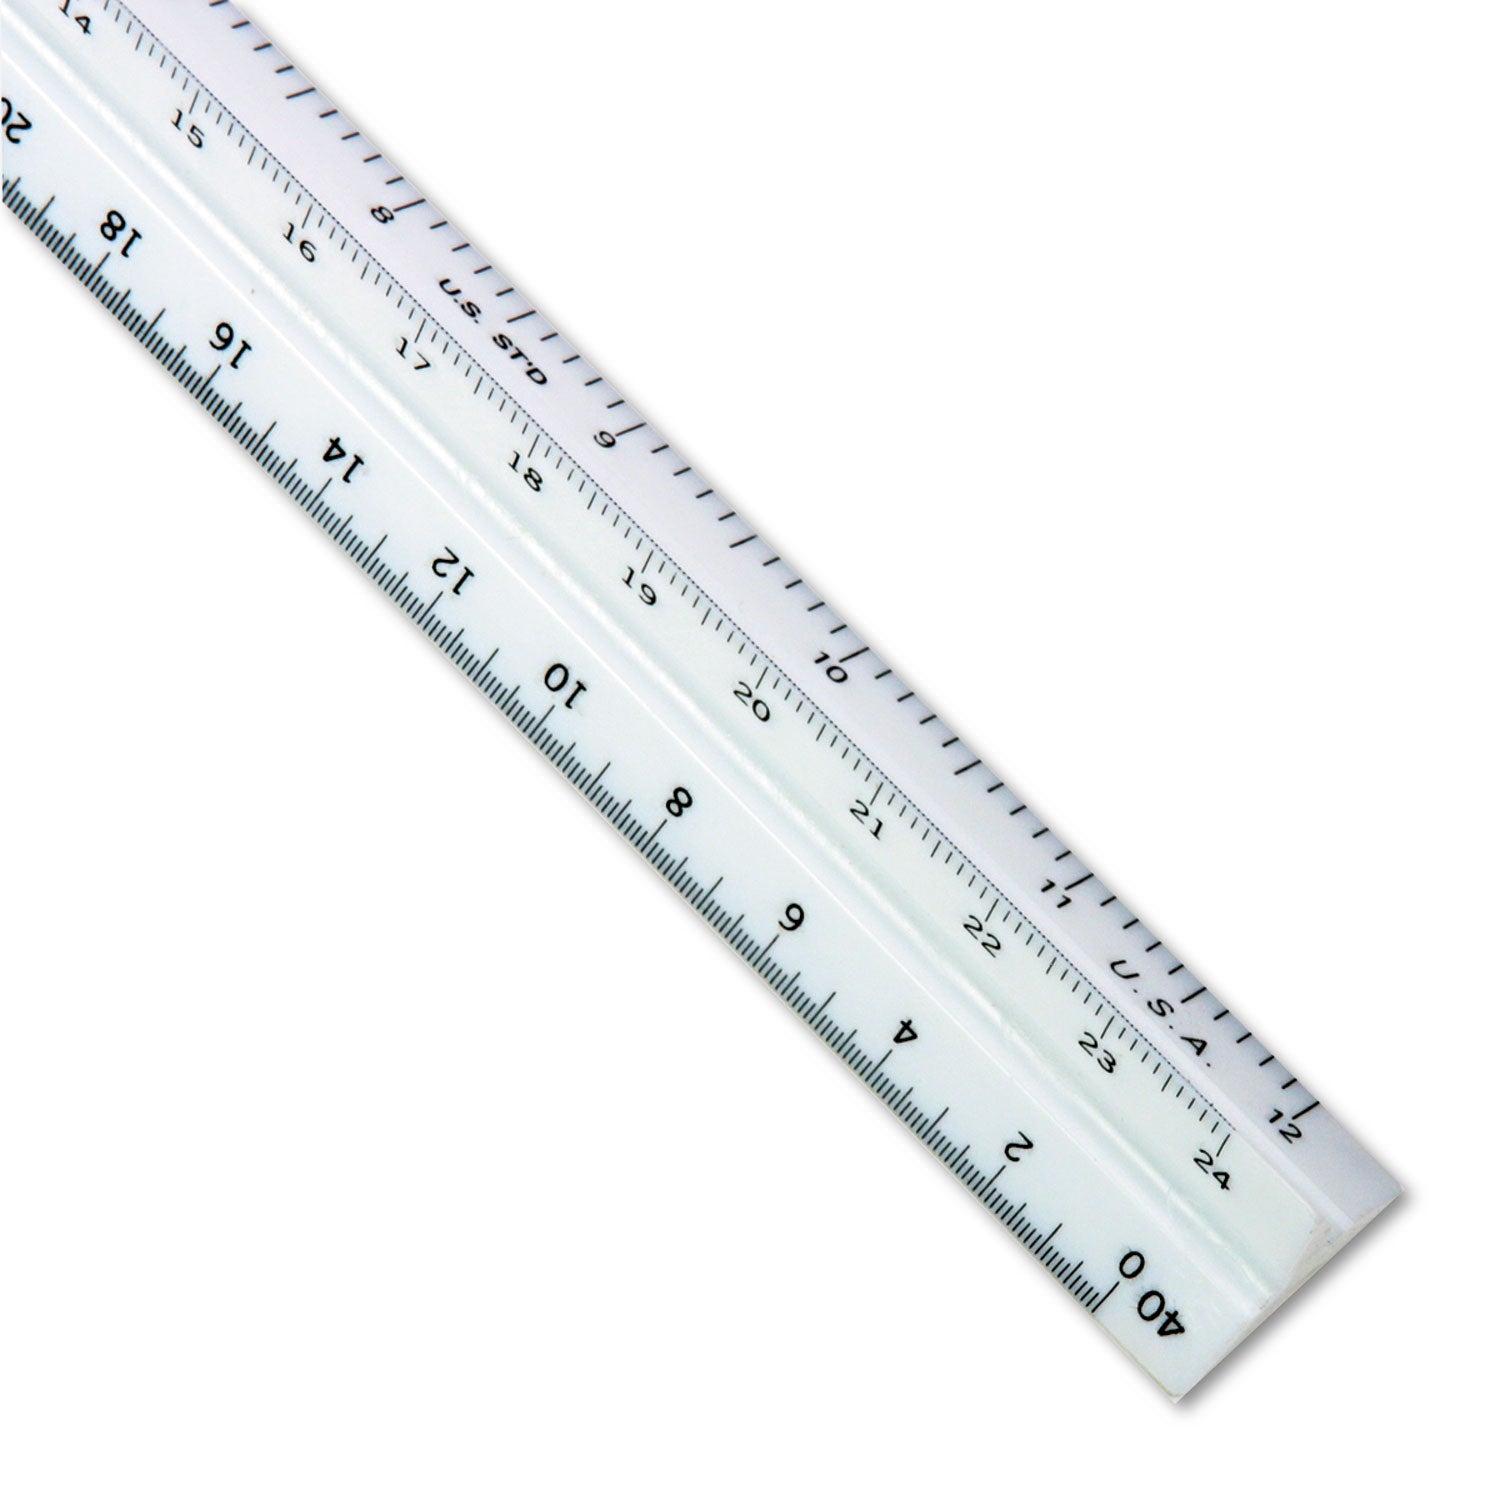 triangular-scale-plastic-engineers-ruler-12-long-white_std9871934 - 1